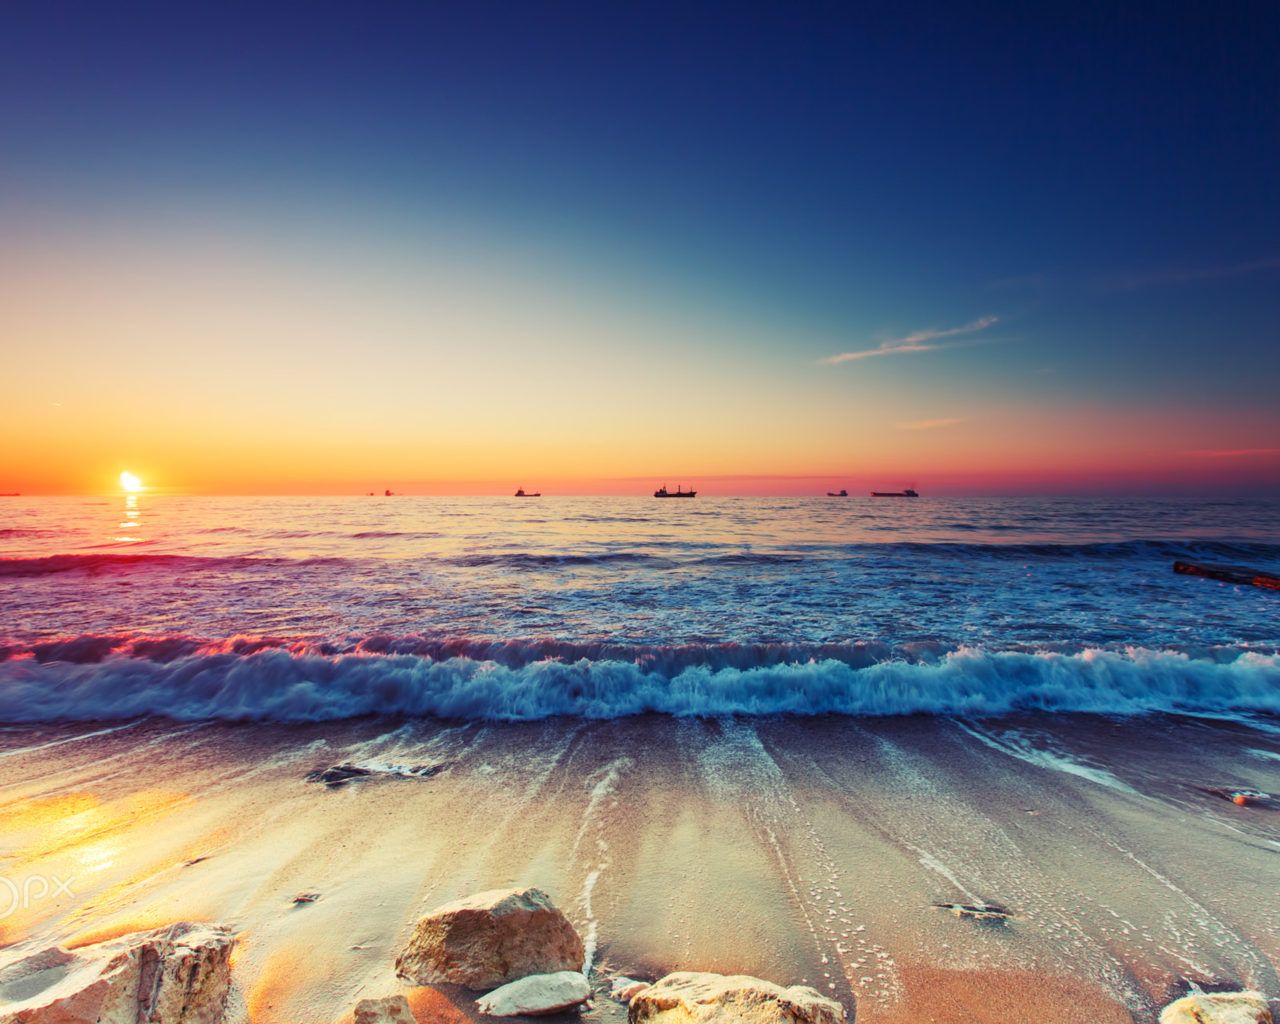 1280x1024 Sunrise Over The Horizon Sea Ships Sandy Beach Waves Beautiful Landscape Wallpaper For Desktop Mobile Phones And Laptops 3840x2400 on WallpaperBat